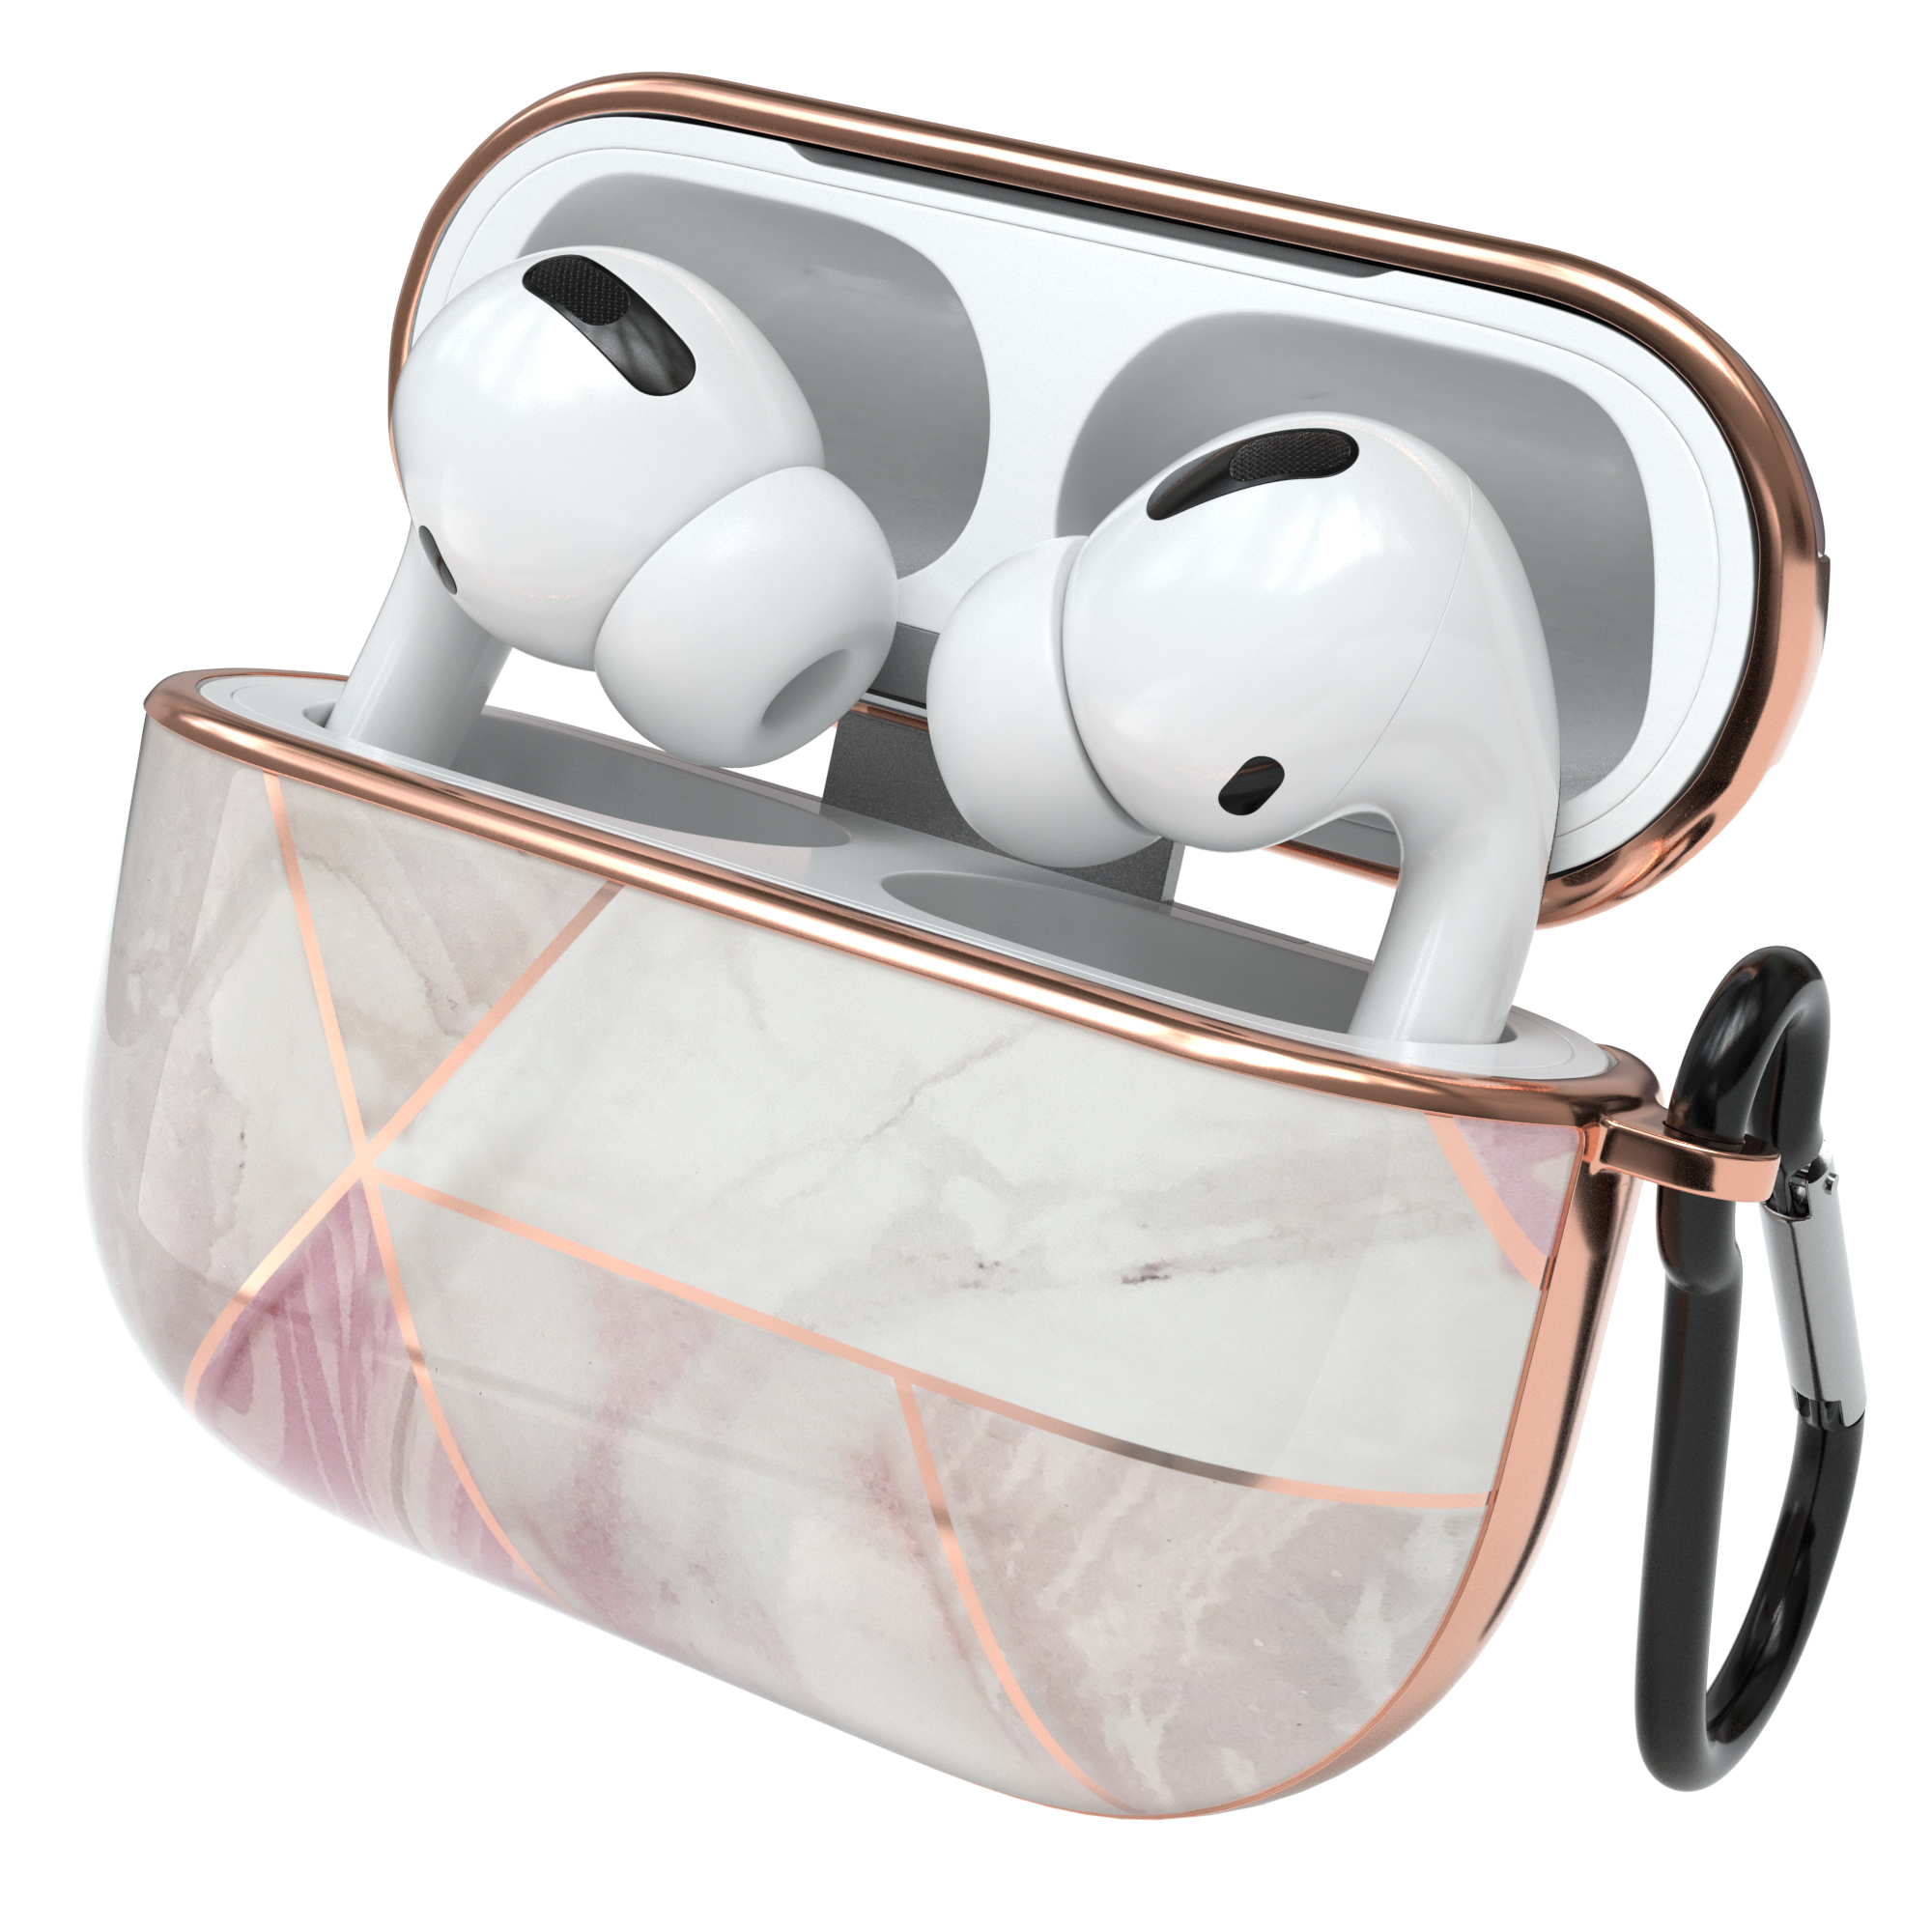 EAZY CASE IMD Motiv für: Pro Schutzhülle / AirPods passend Apple Roségold Rosa Case Sleeve